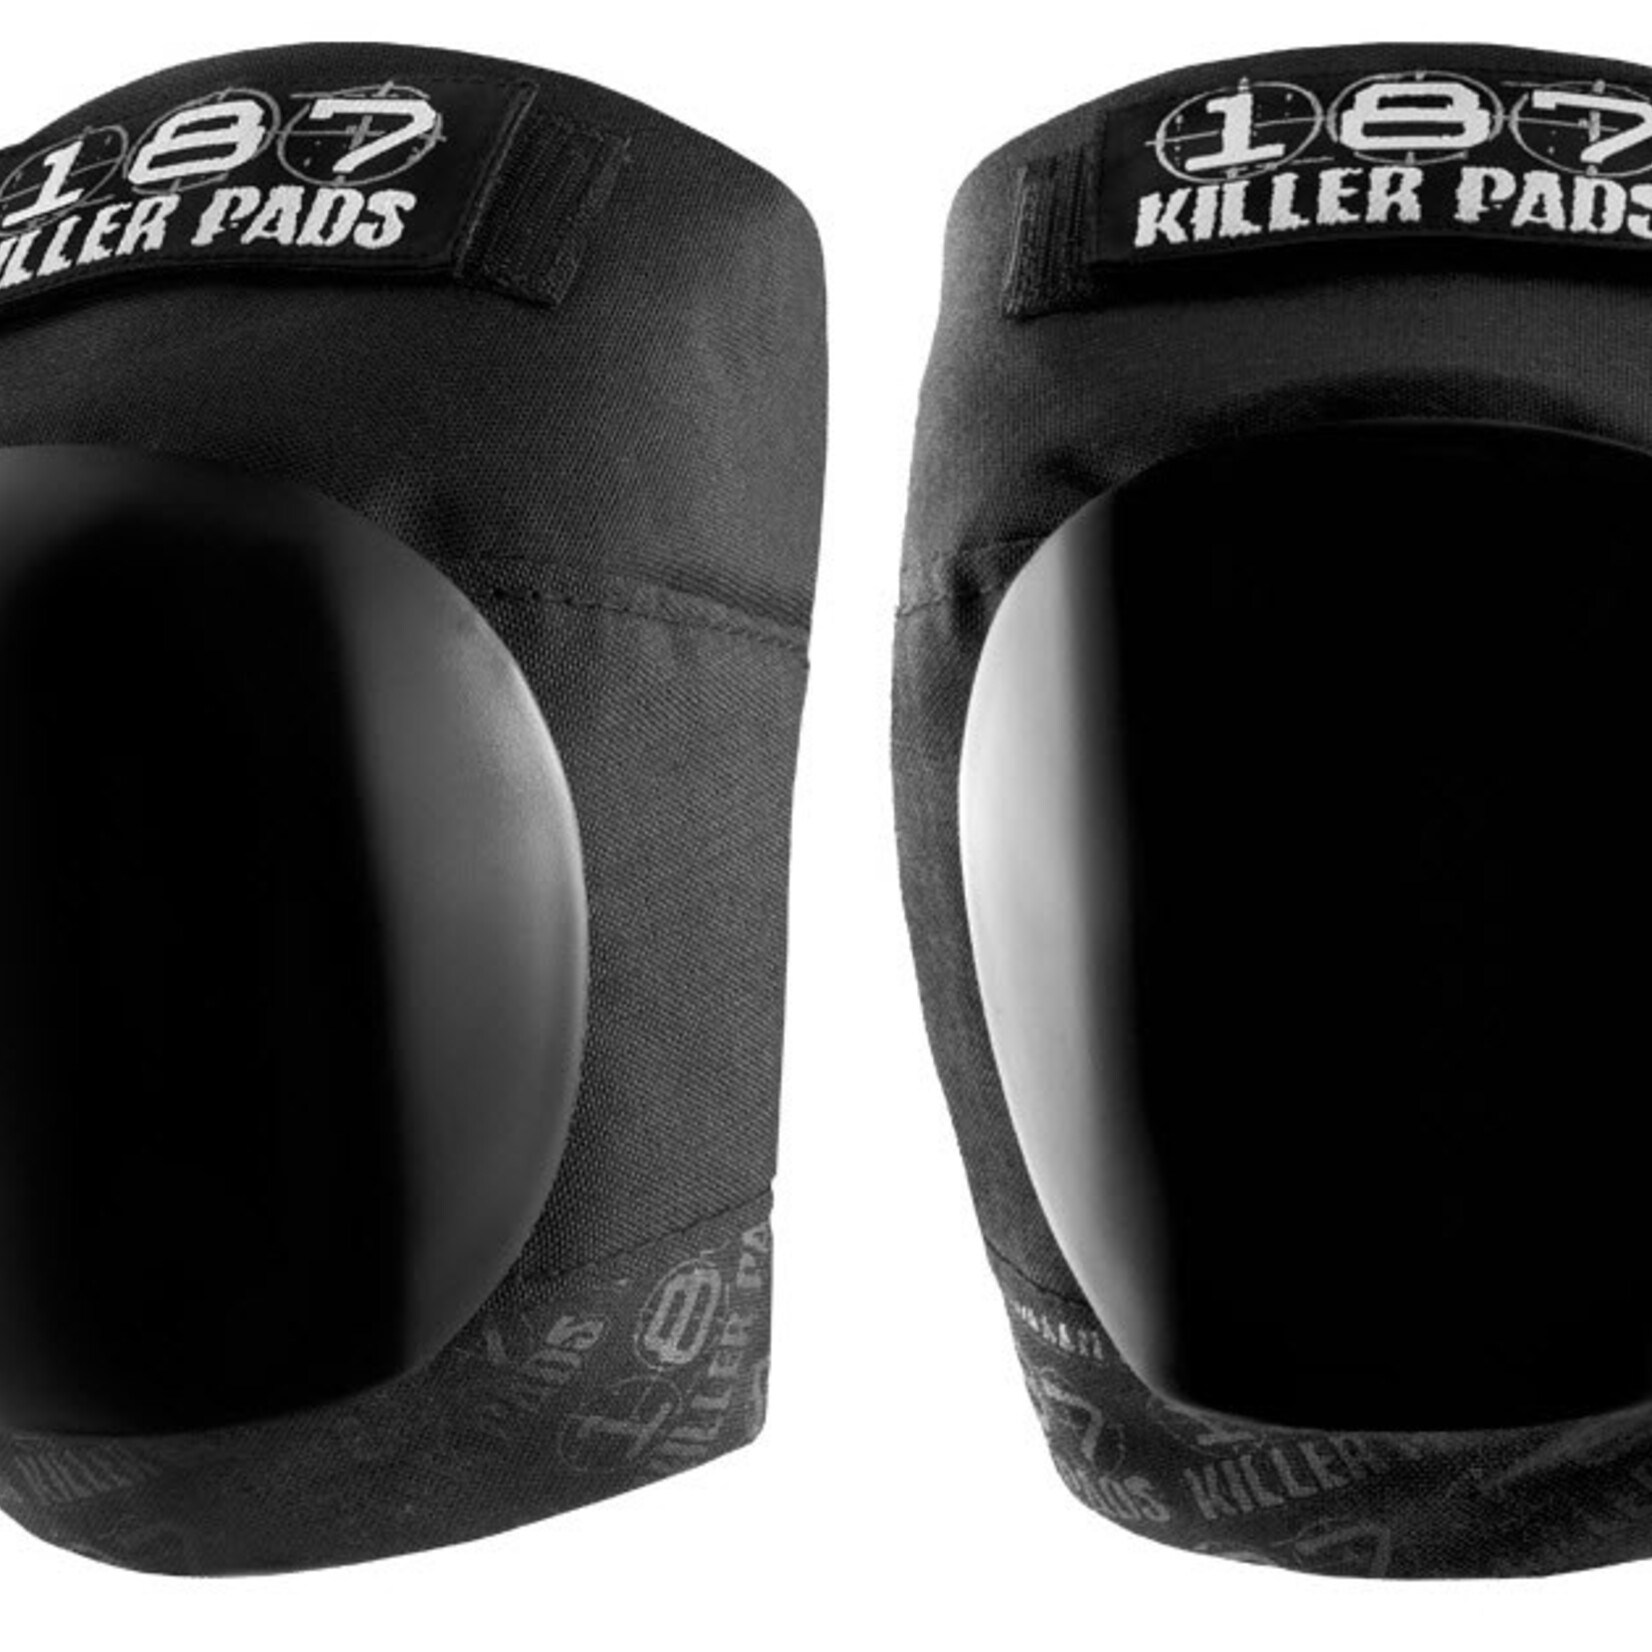 187 Killer Pads 187 Killer Pads Pro Knee Pad - Black/Black